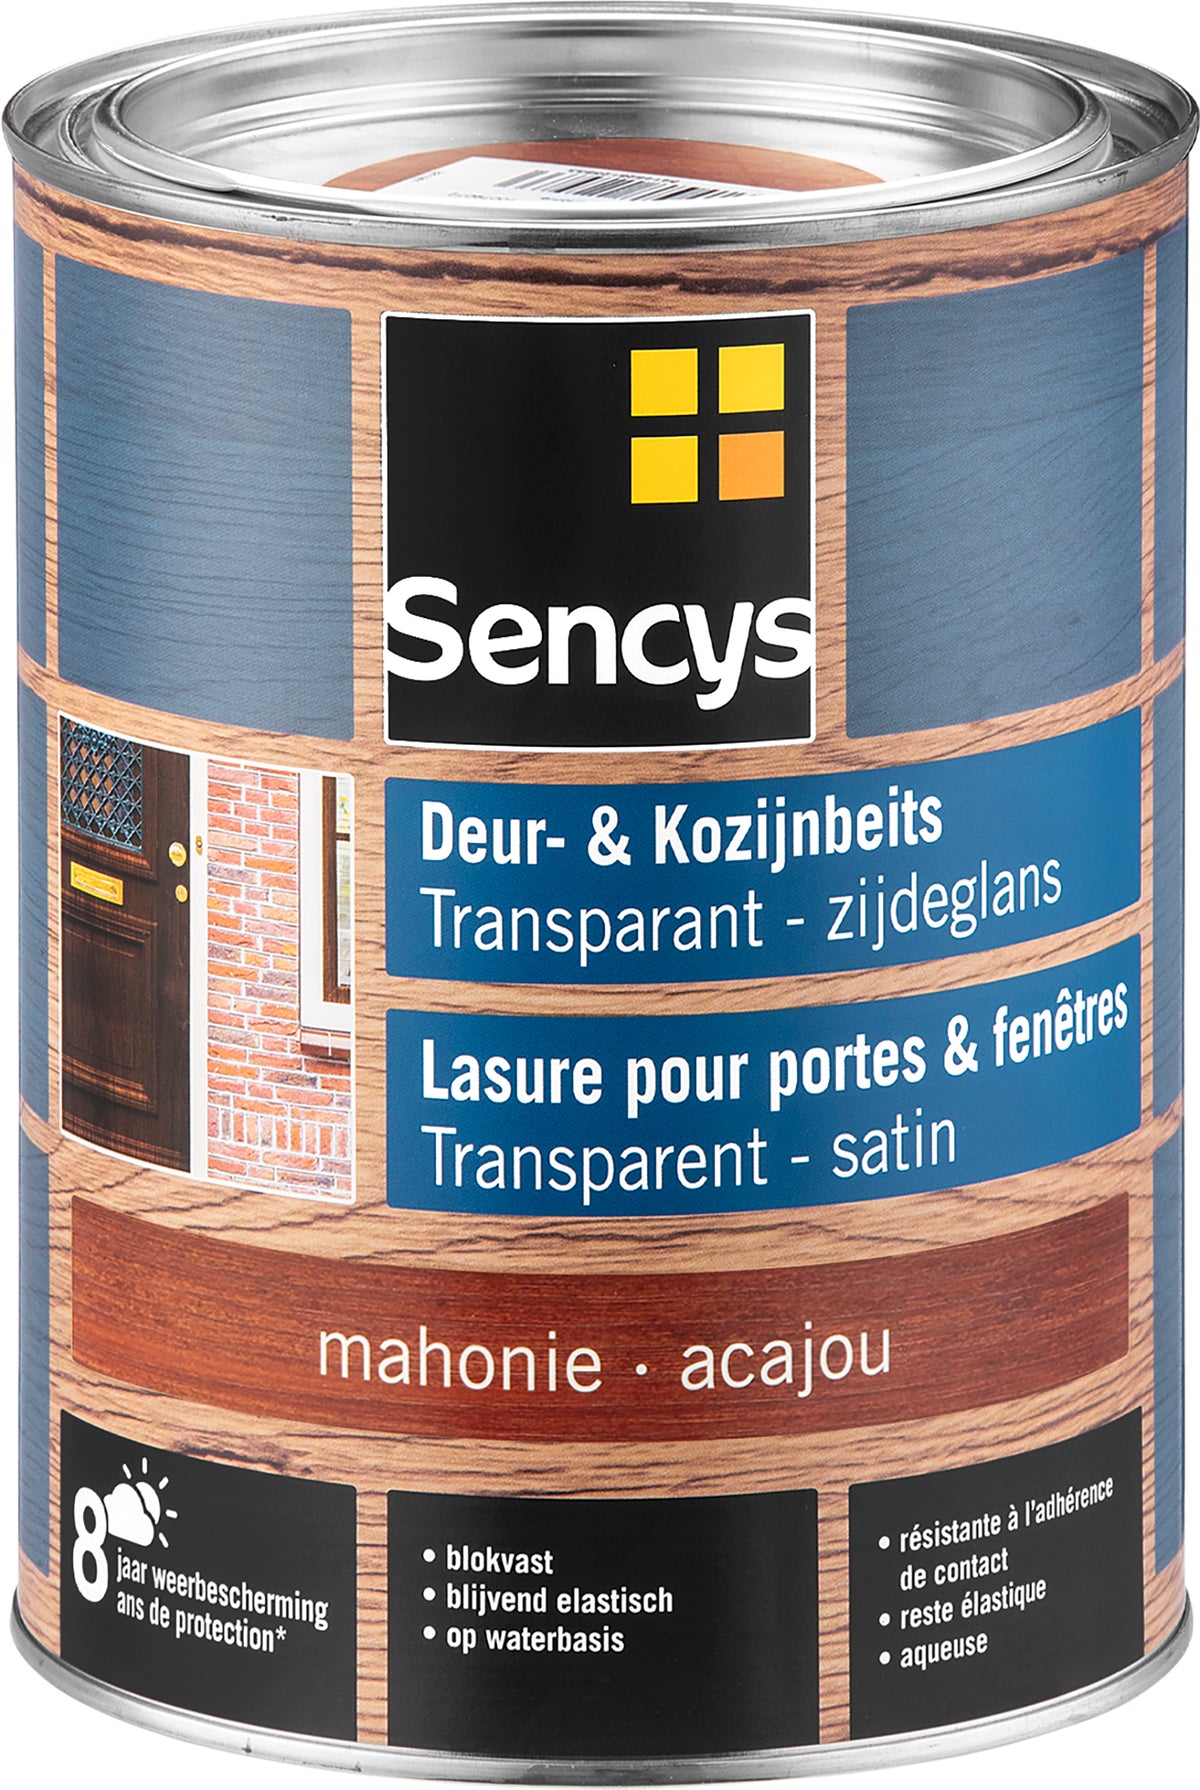 Sencys beits ramen en deuren semi-transparant zijdeglans mahonie 2,5L